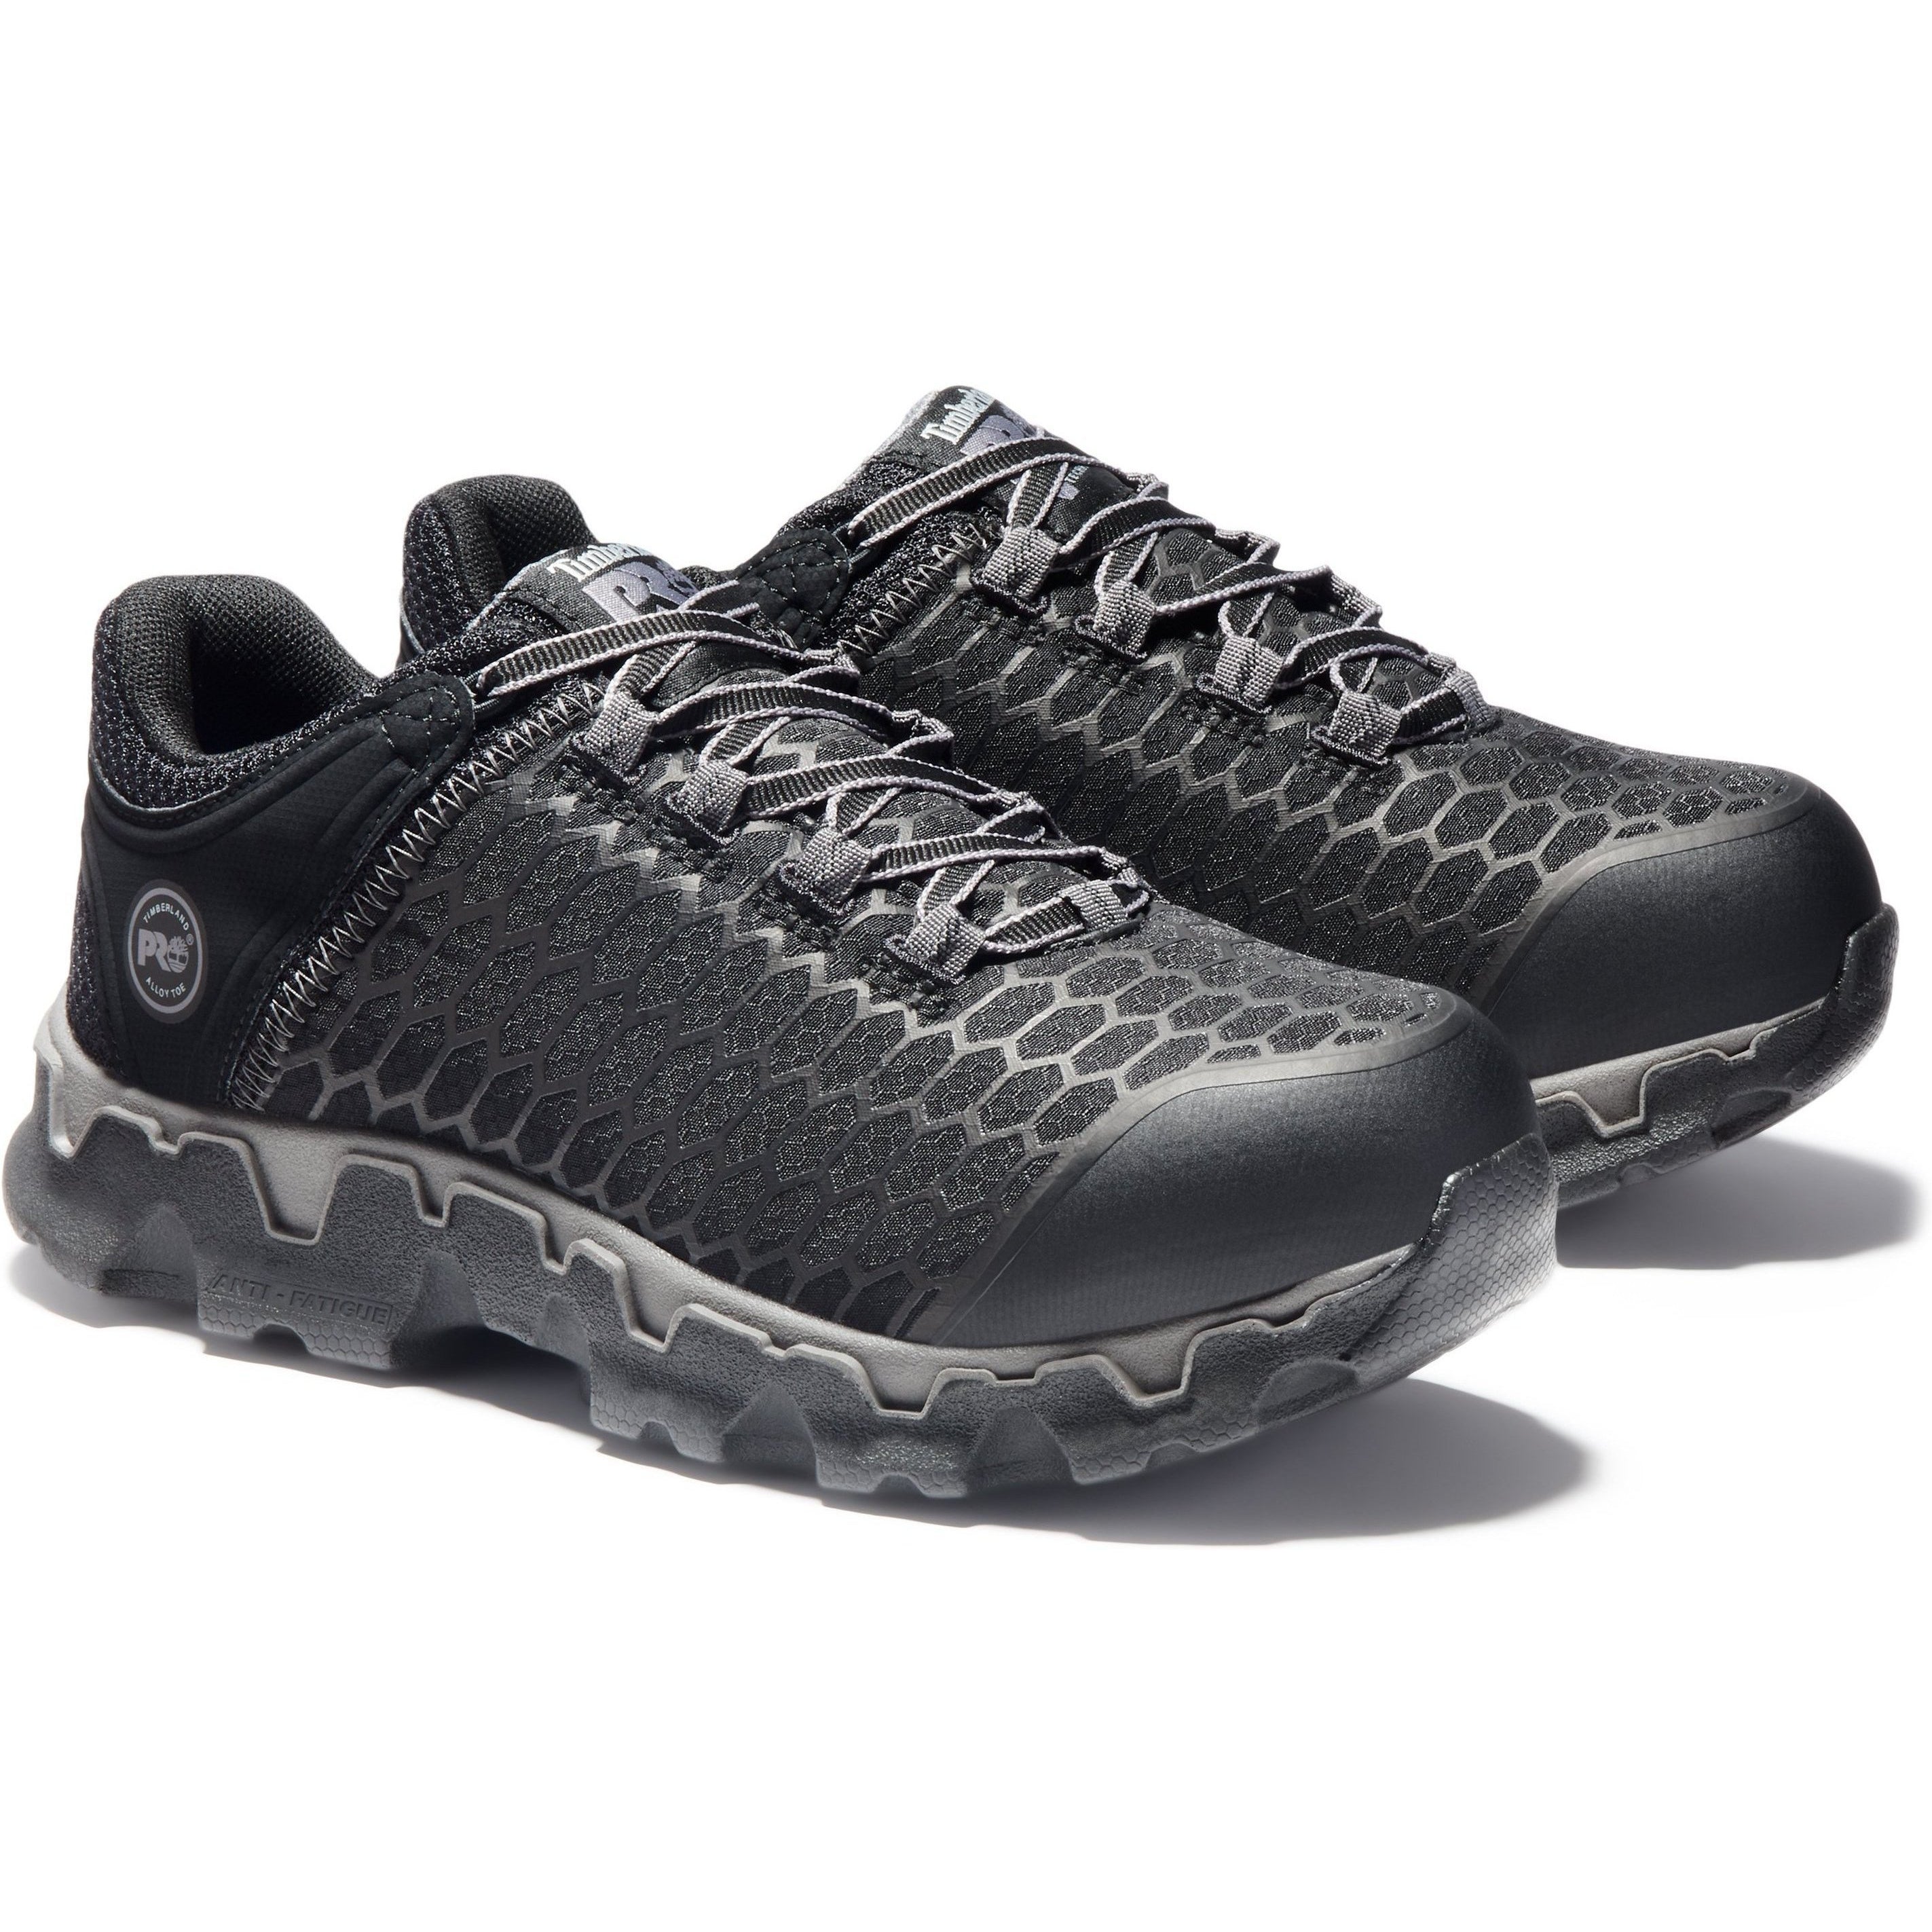 Timberland PRO Women's Powertrain Alloy Toe Work Shoe - TB0A1B7F001 5.5 / Medium / Black - Overlook Boots